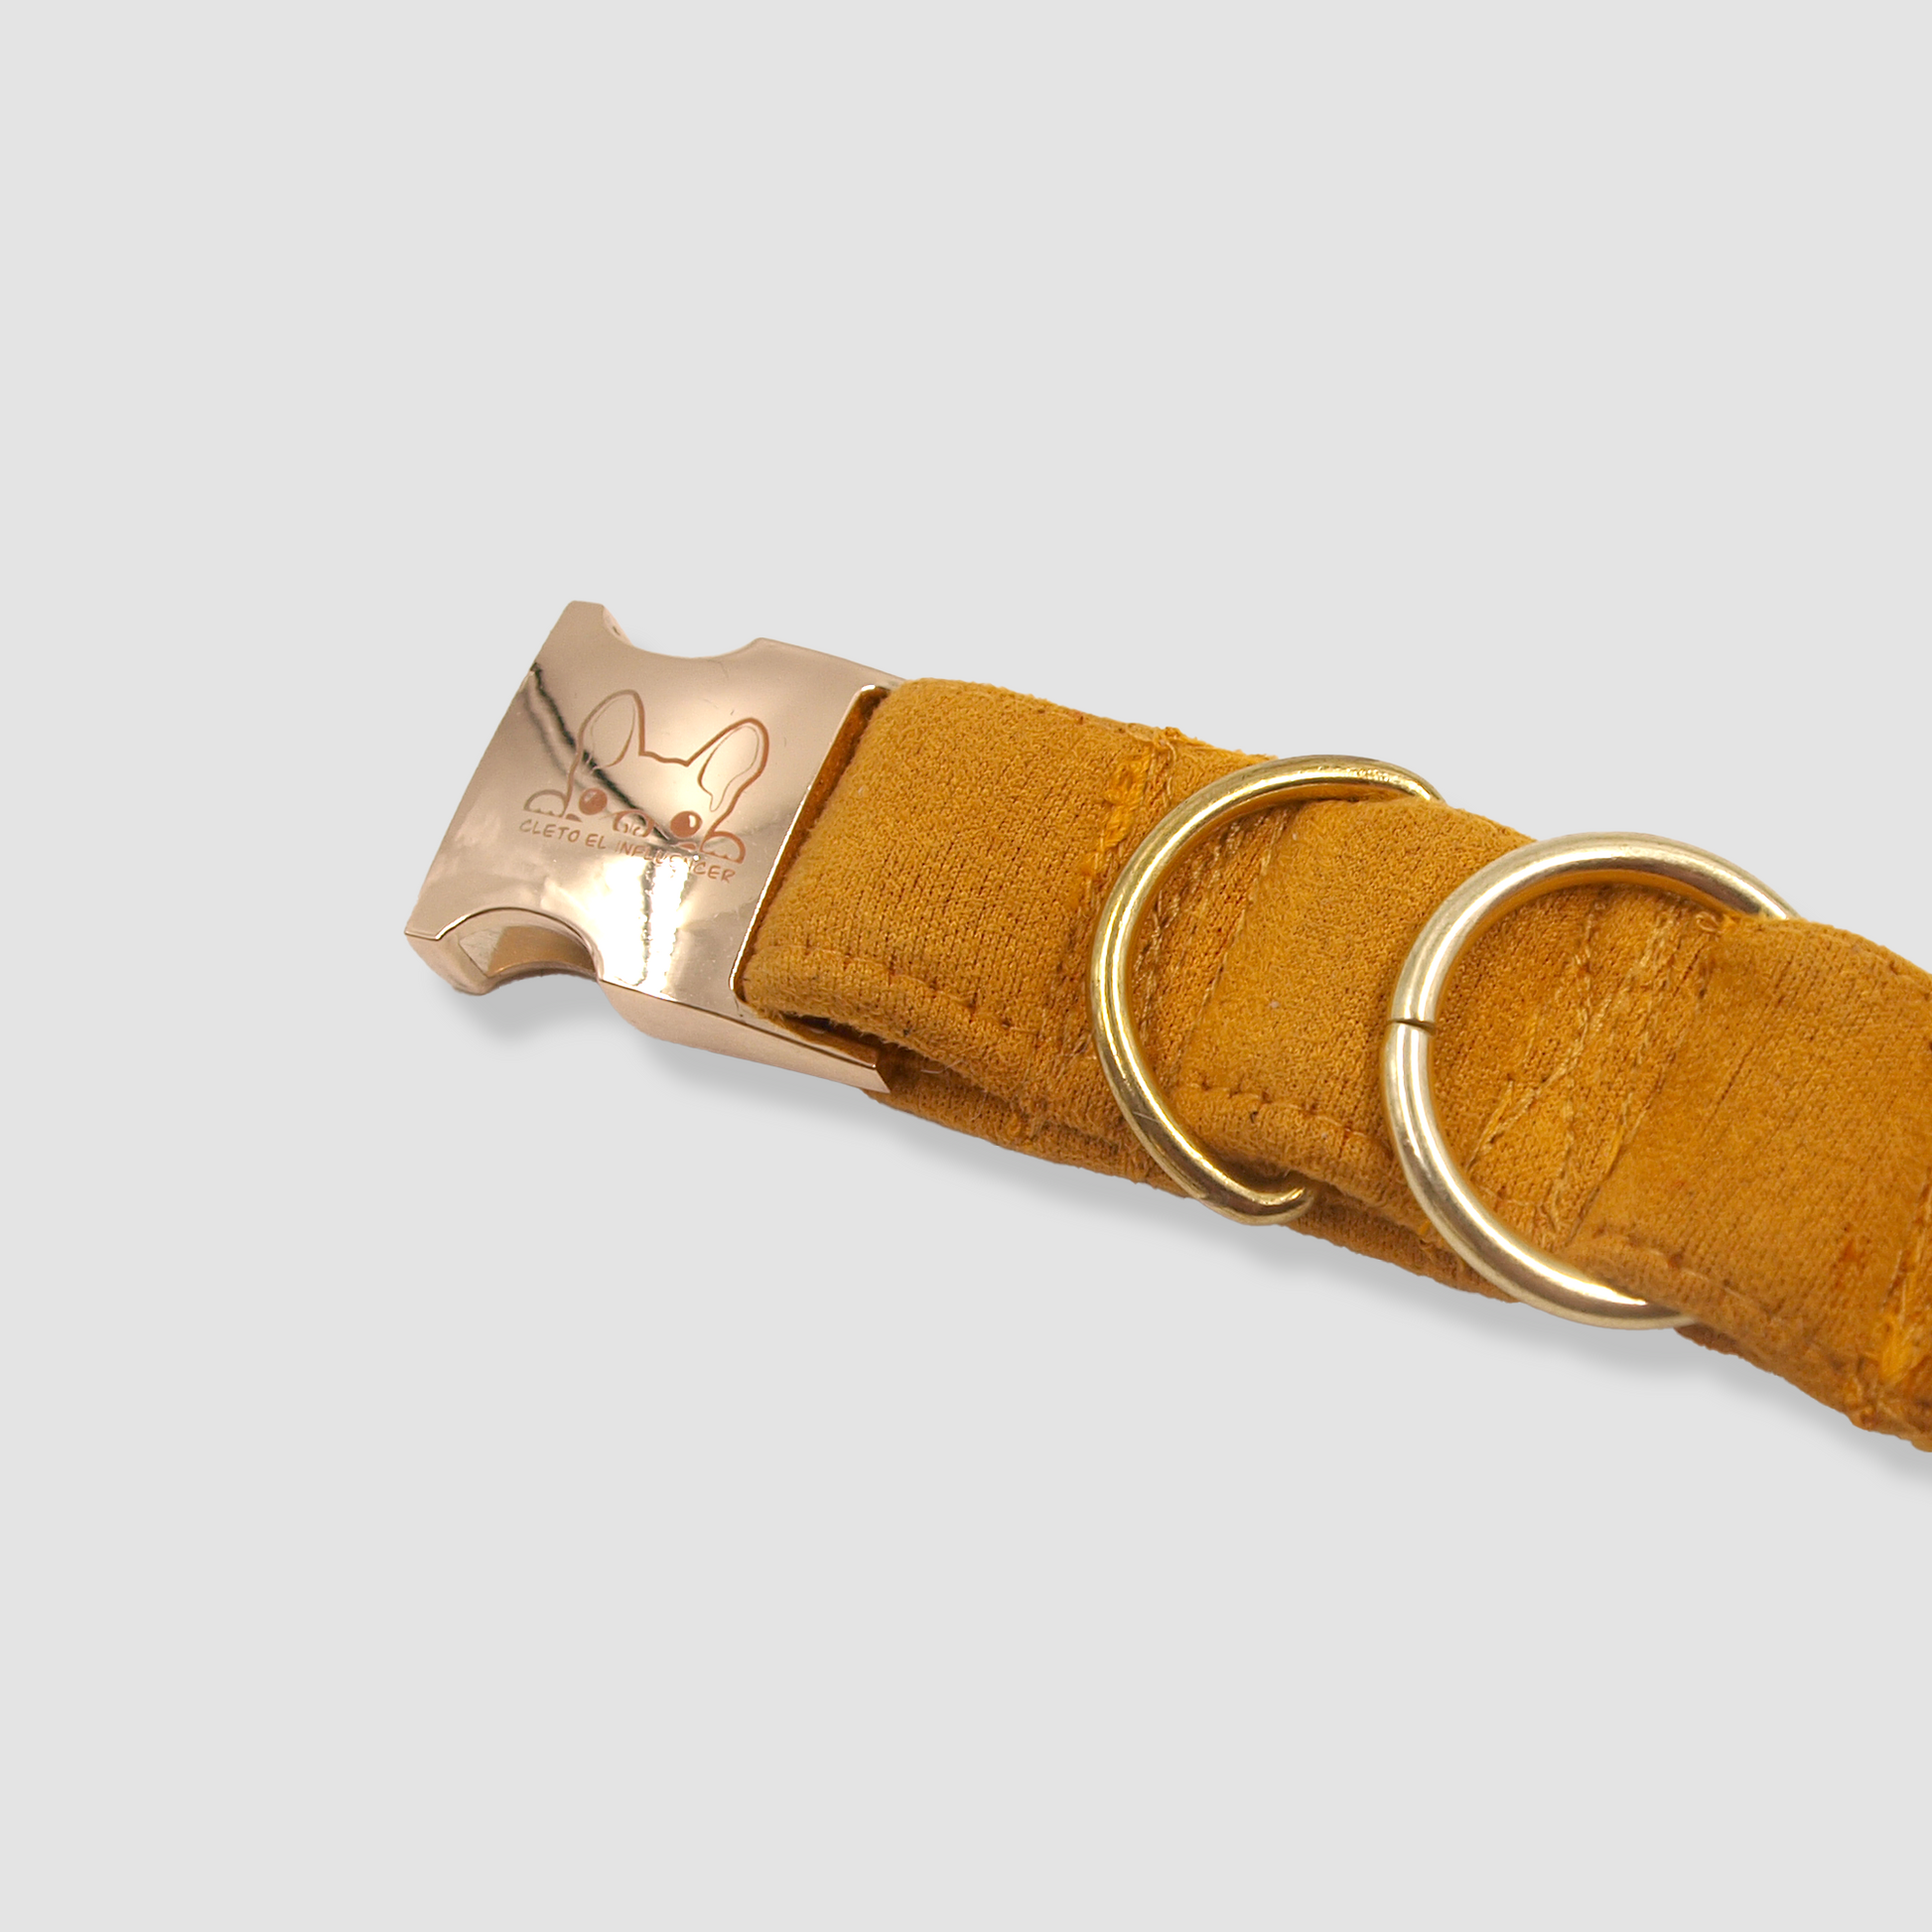 Collar para mascota color mostaza con hebilla dorada.